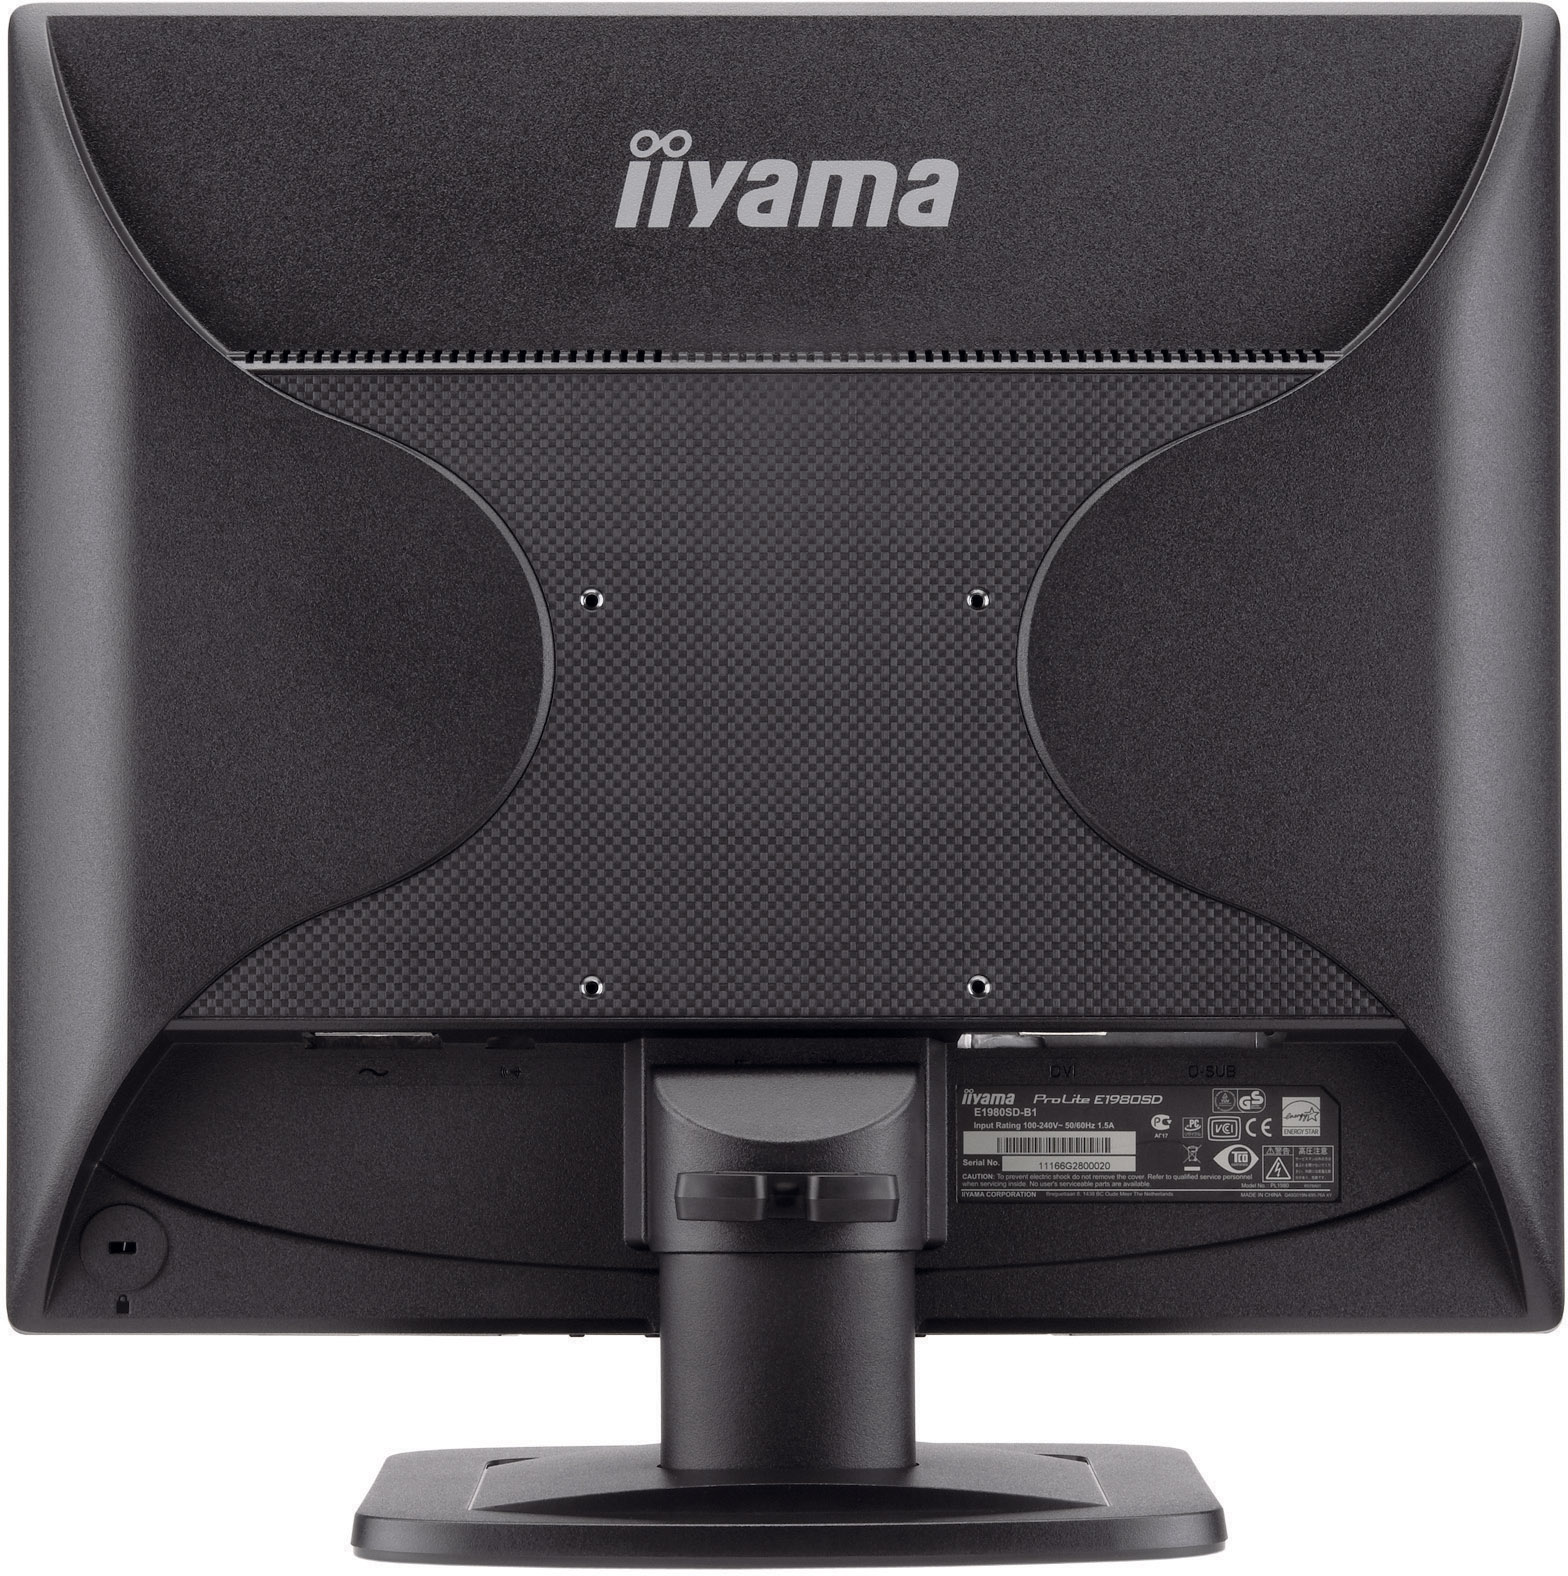 Iiyama E1980SD-B1 LED-Monitor EEK E (A - G) 48.3 cm (19 Zoll) 1280 x 1024 Pixel 5:4 5 ms DVI, VGA T